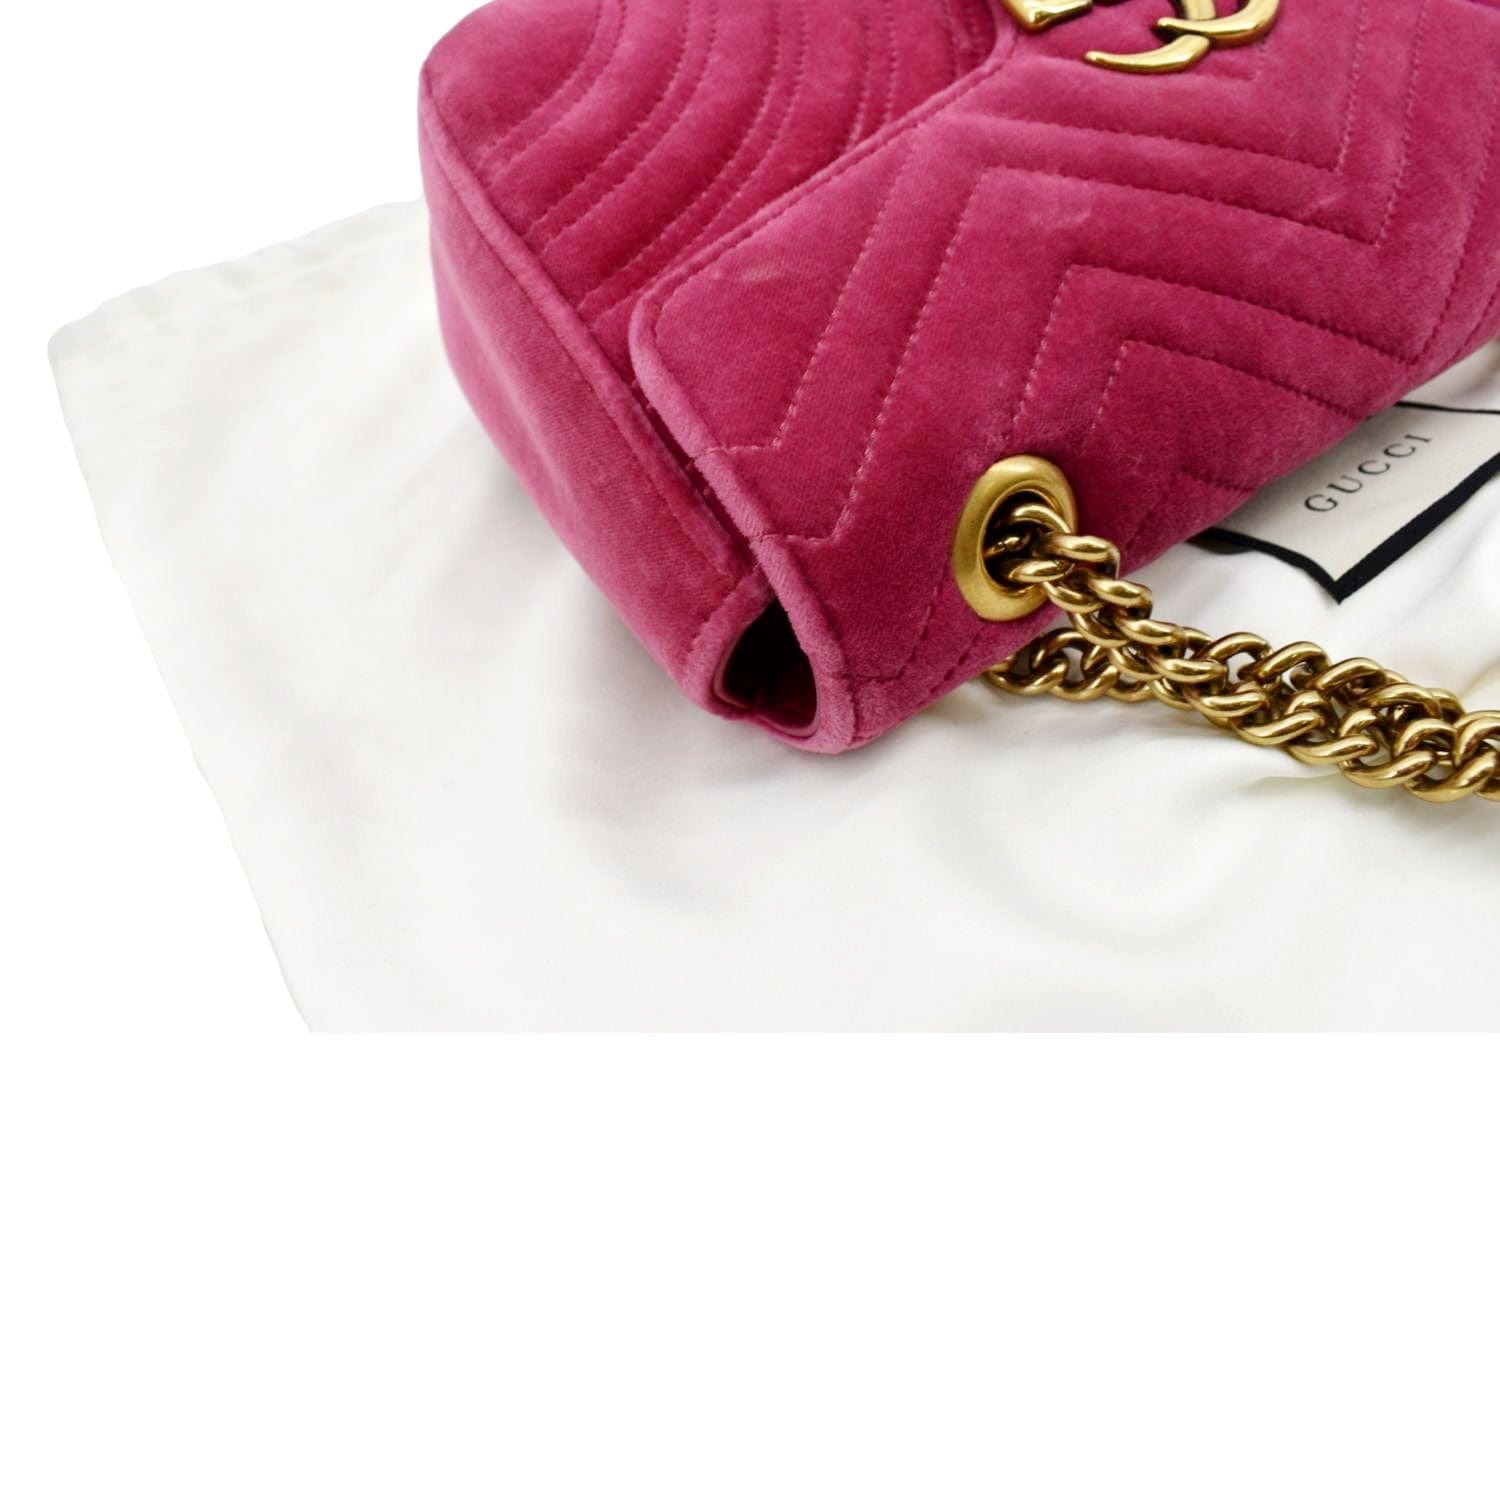 Gucci Pink GG Marmont Small Velvet Shoulder Bag Gucci